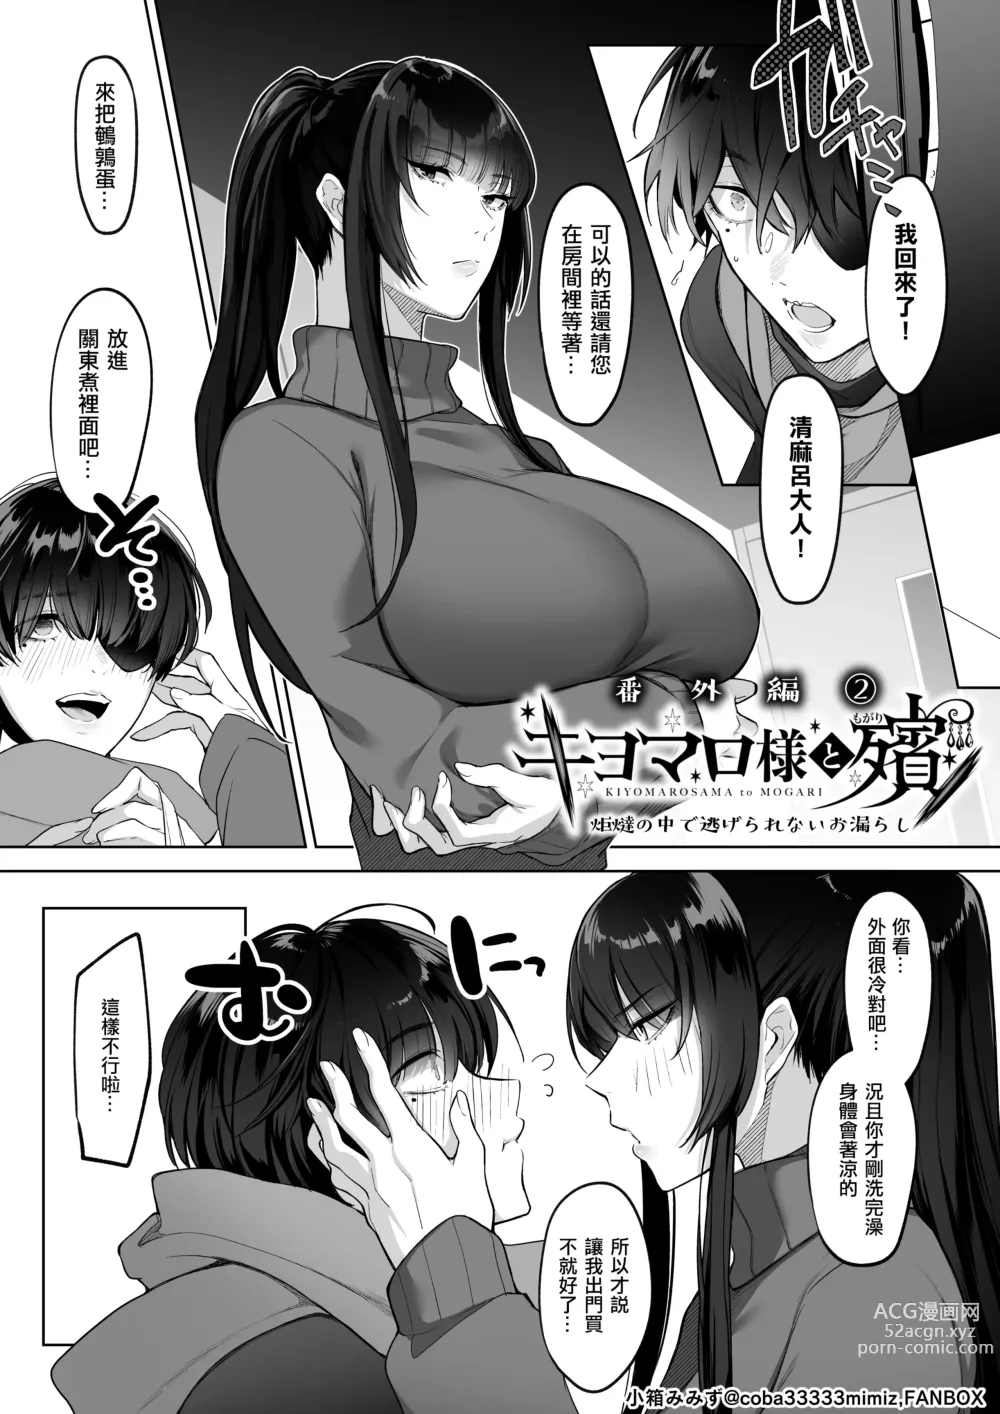 Page 44 of manga Kiyomaro-Sama to Mogari